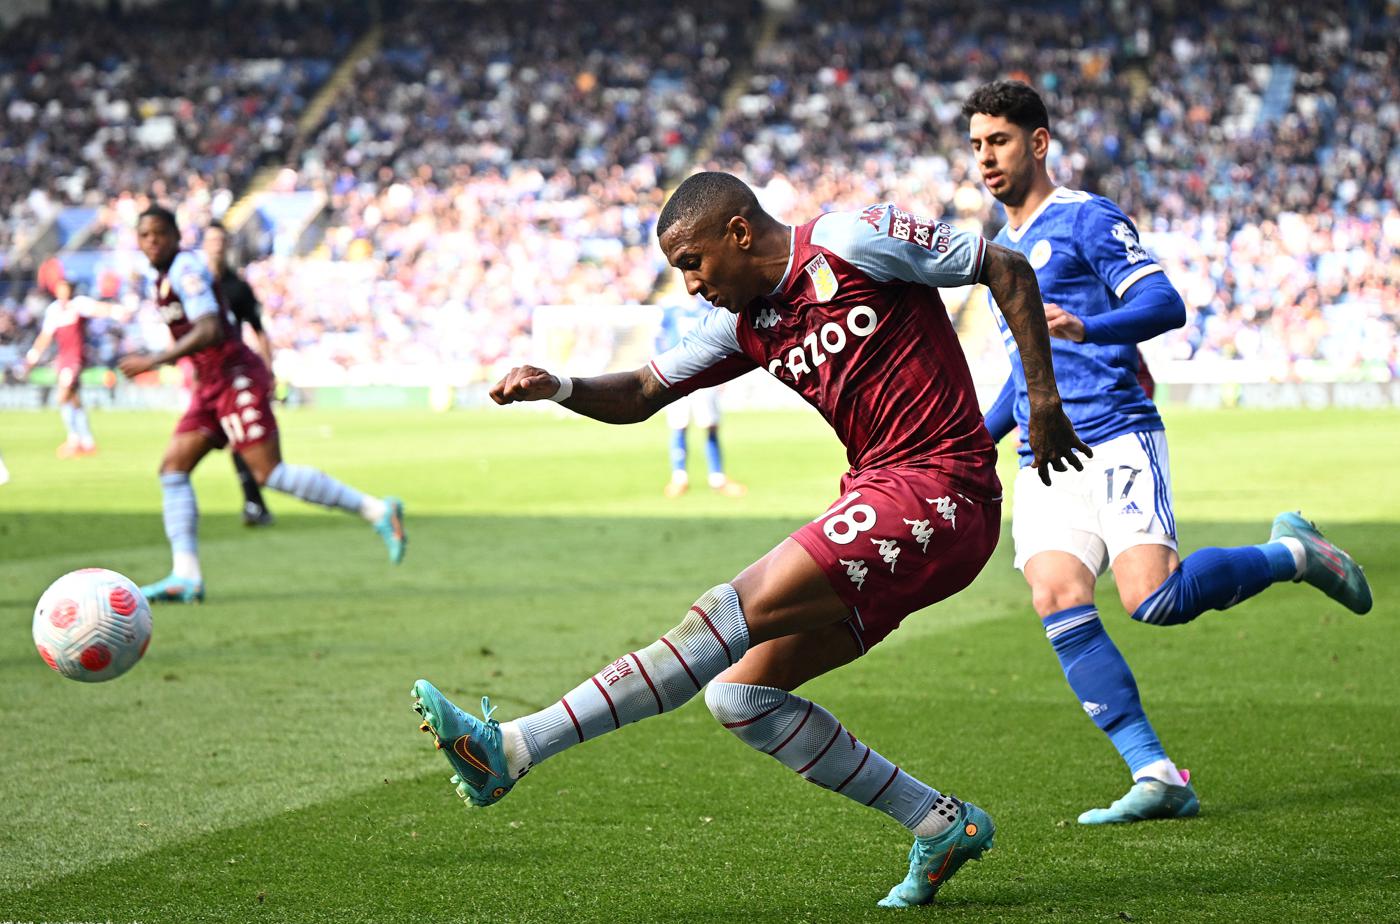 Leicester - Aston Villa - 1:2. English Championship, round 7. Match review, statistics.